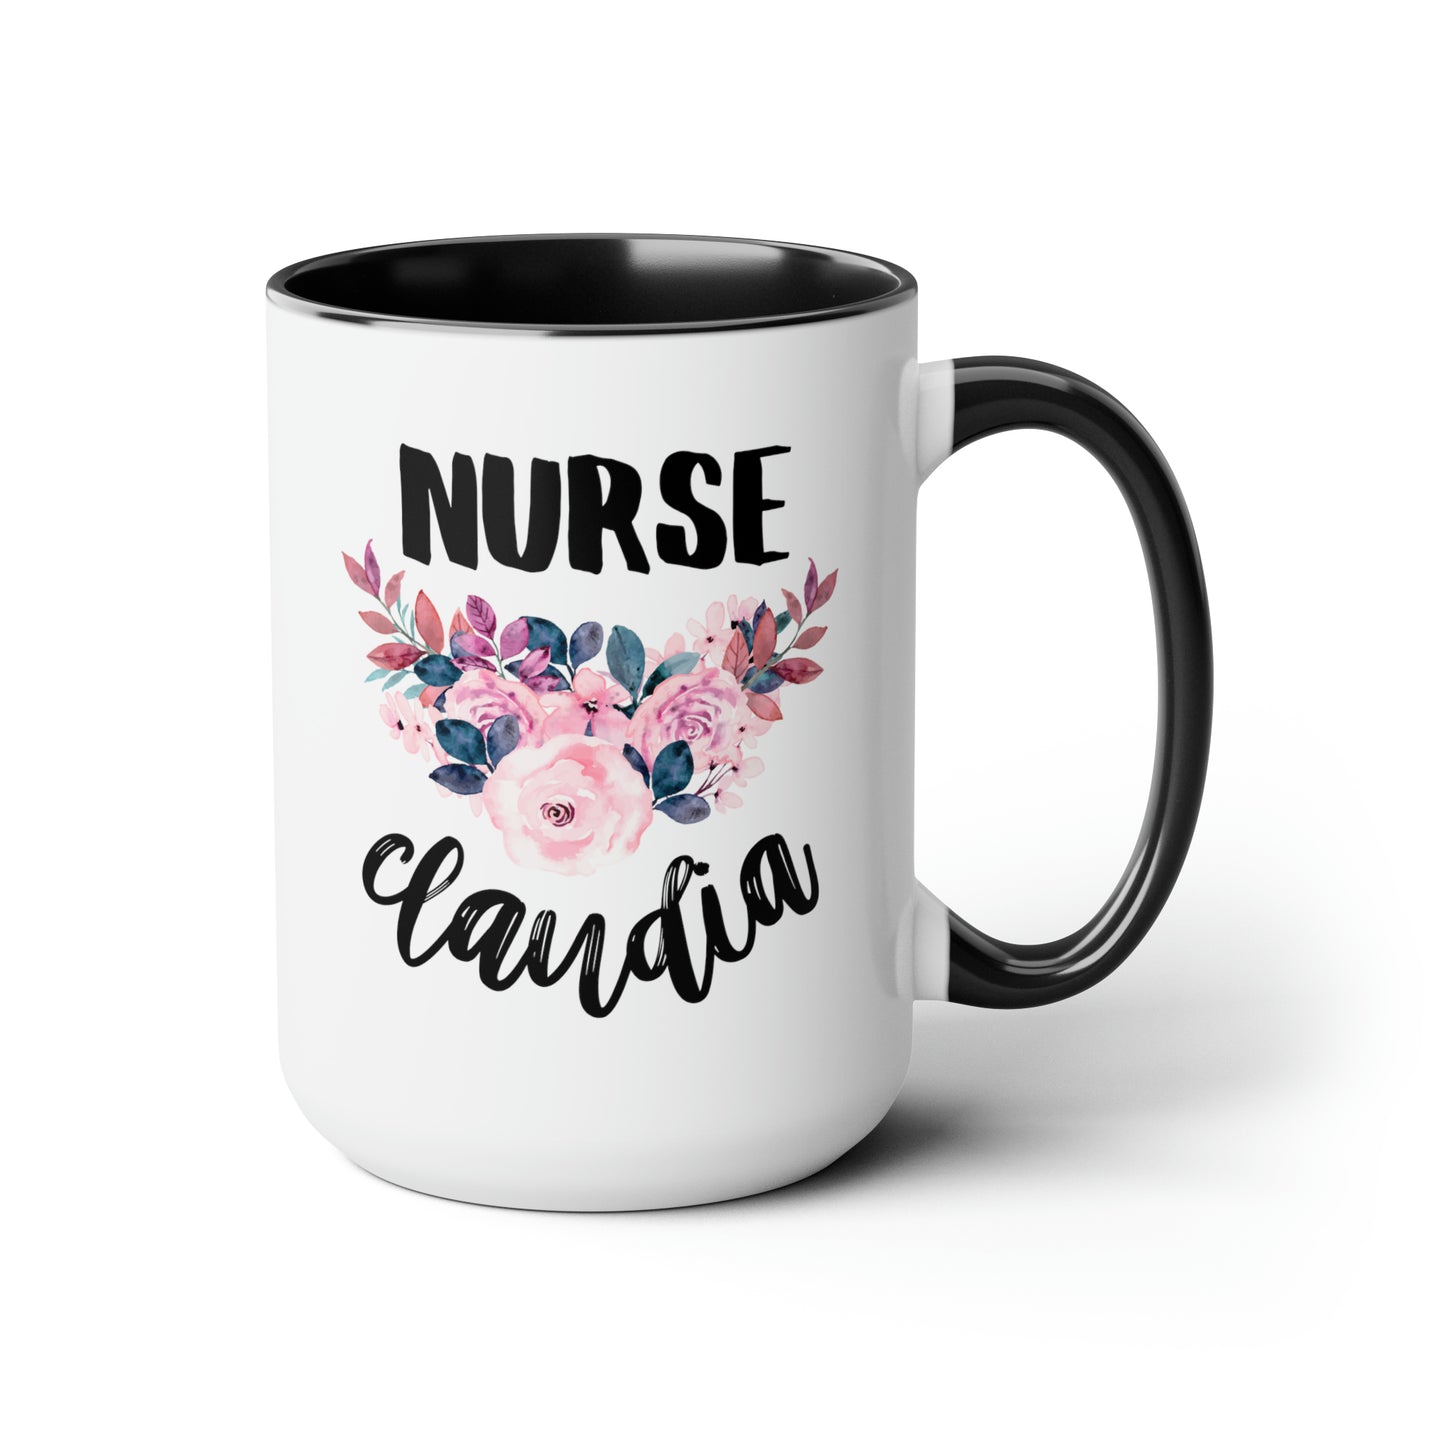 Nurse Name 15oz white with black accent funny large coffee mug gift for registered nurse RN custom personalized appreciation waveywares wavey wares wavywares wavy wares